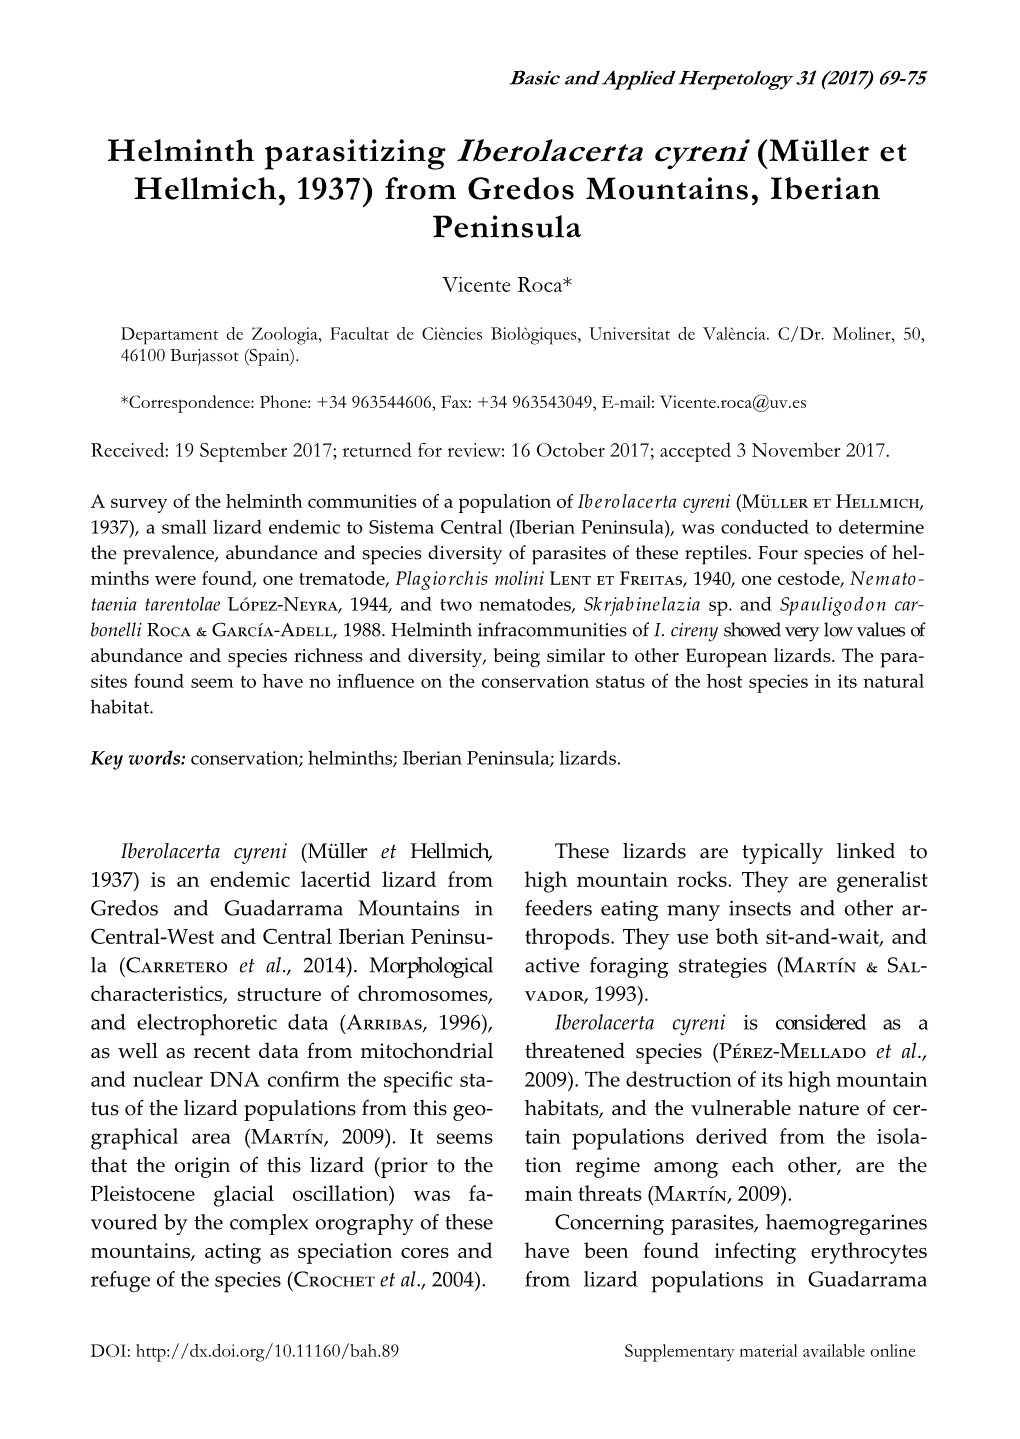 Helminth Parasitizing Iberolacerta Cyreni (Müller Et Hellmich, 1937) from Gredos Mountains, Iberian Peninsula